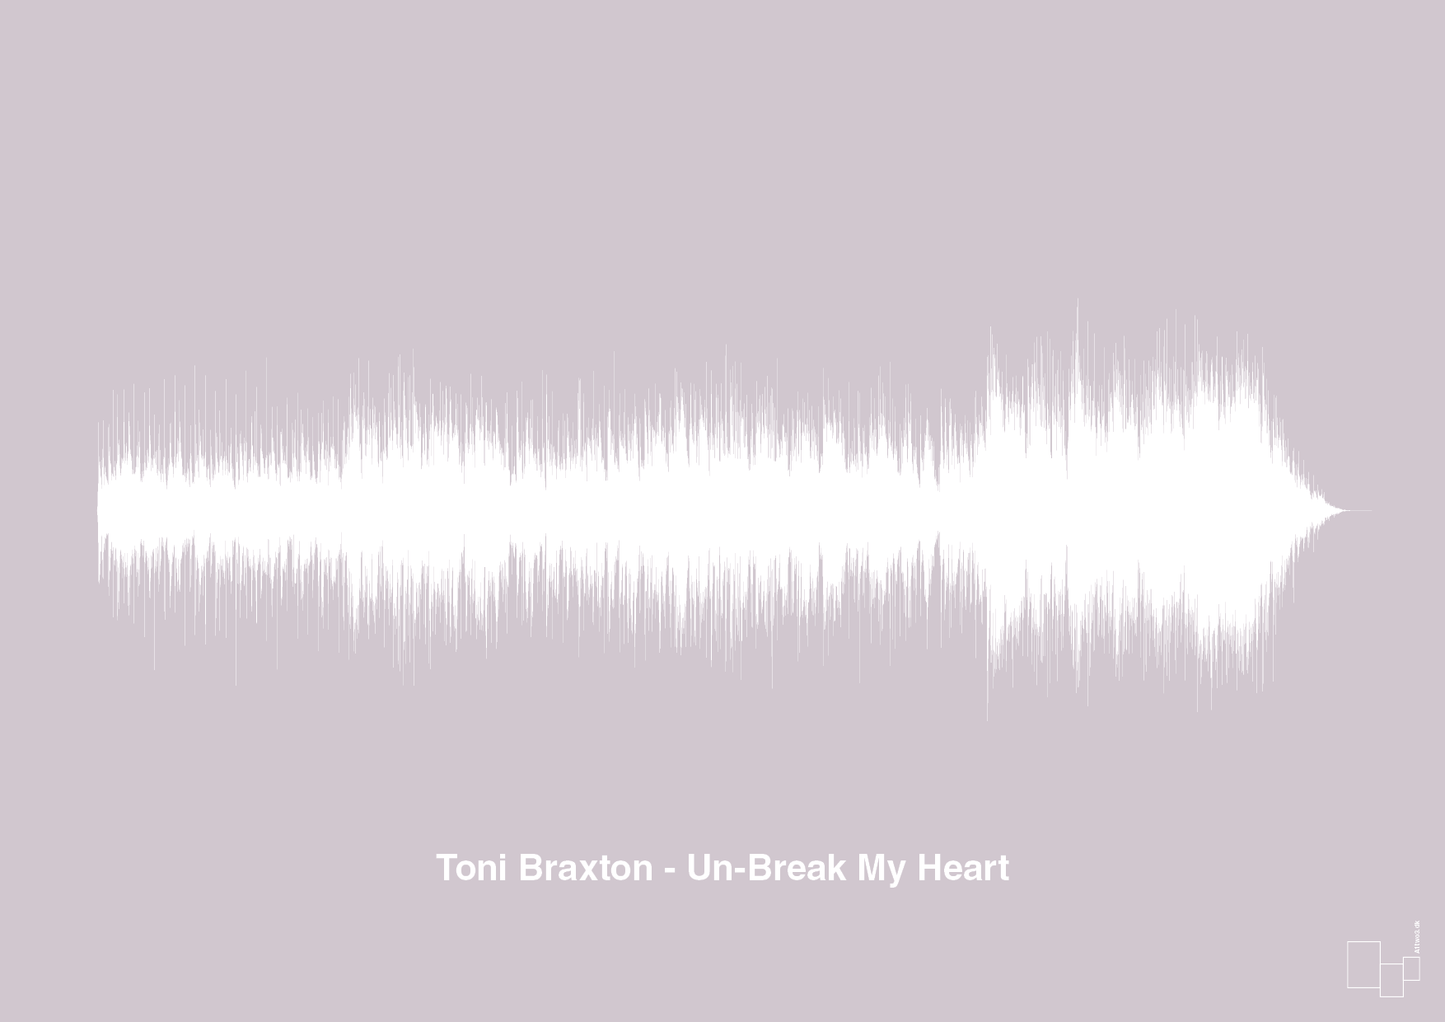 toni braxton - un-break my heart - Plakat med Musik i Dusty Lilac